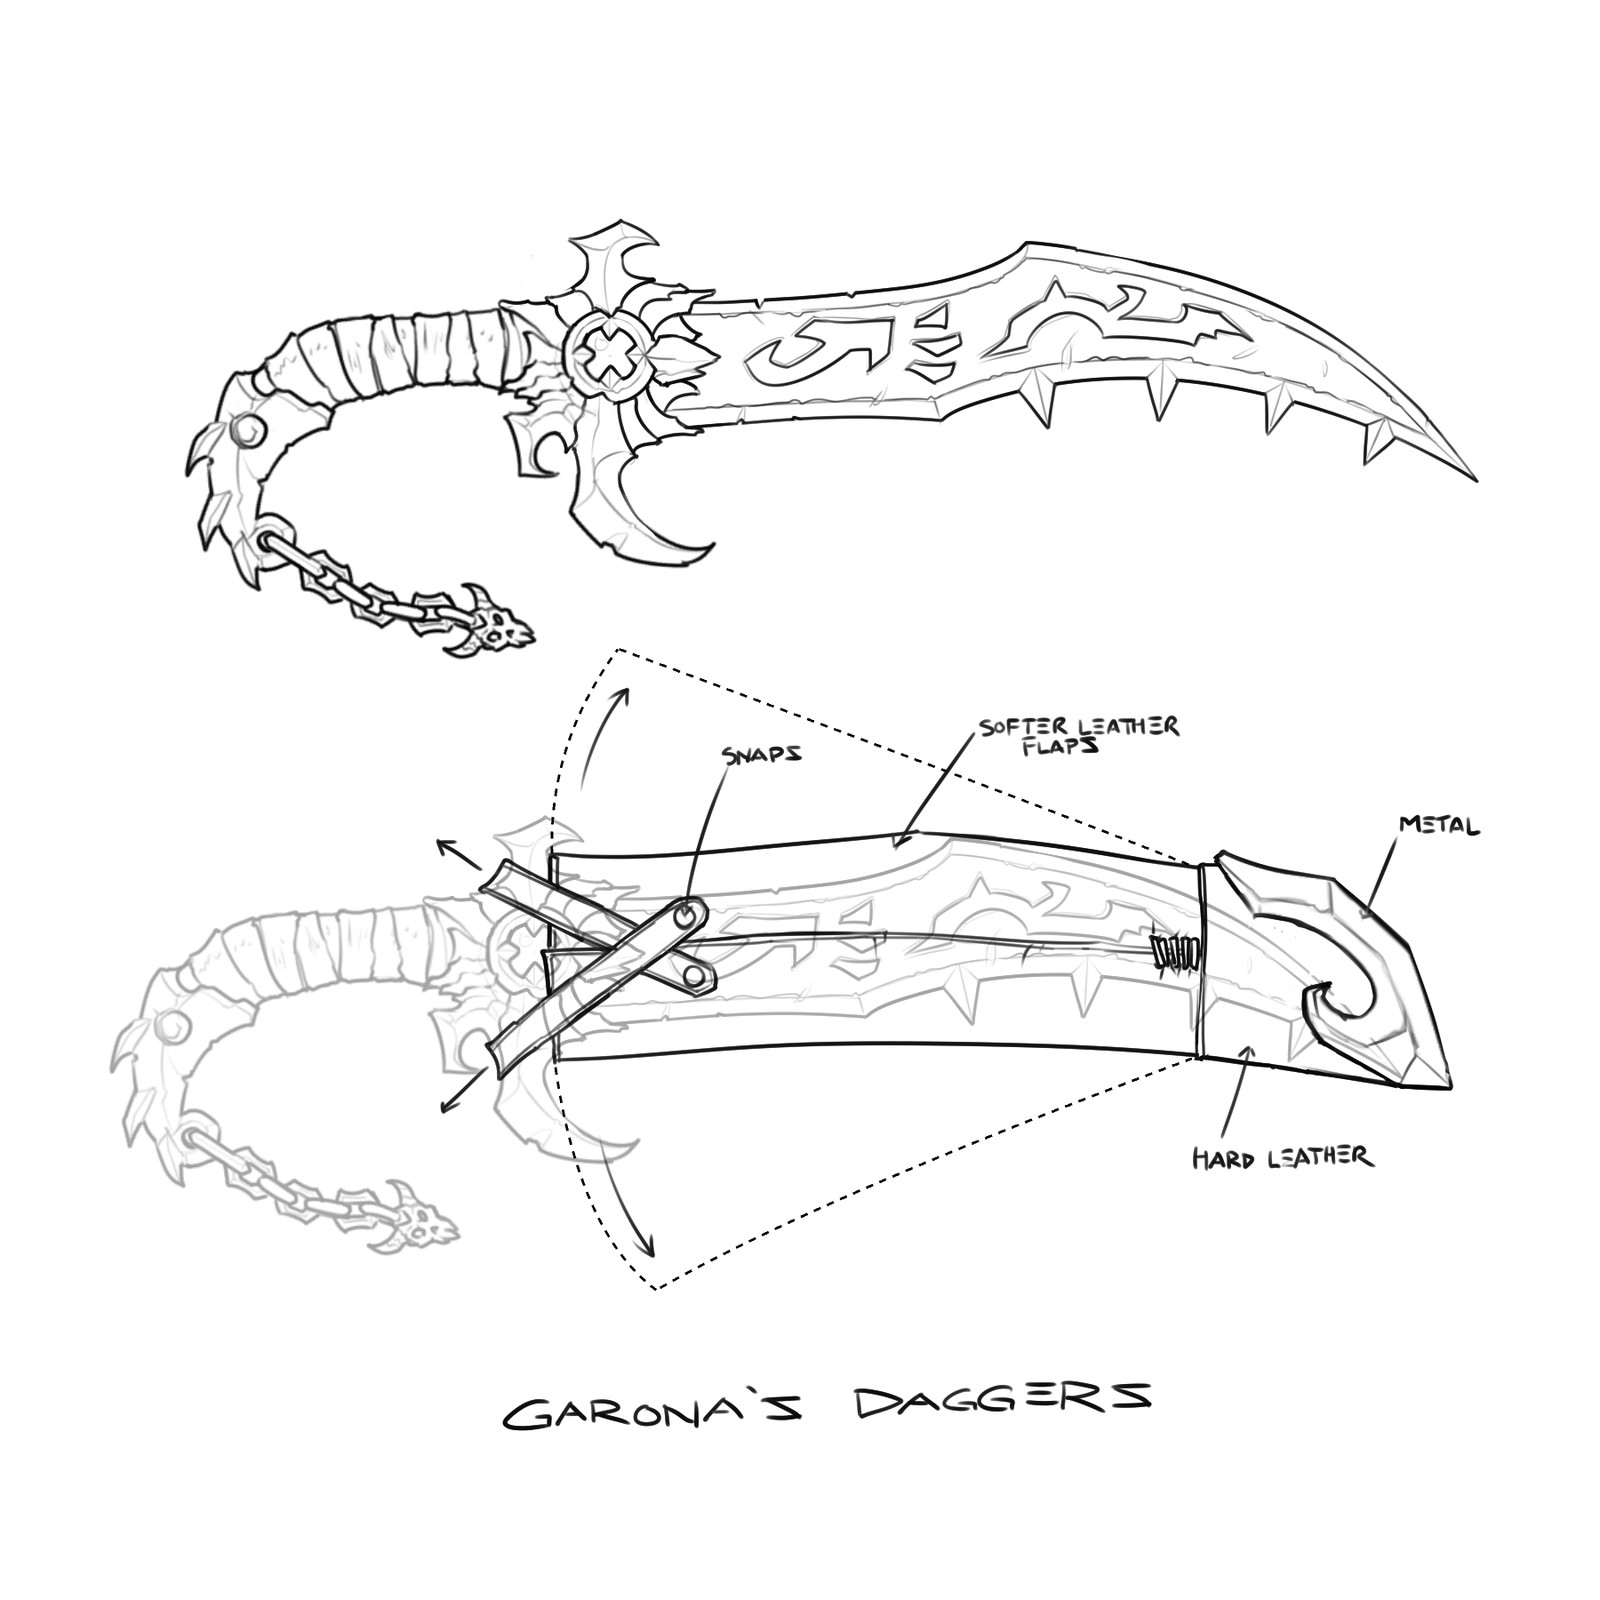 Dagger concept for Shadowblade Garona's daggers and sheath. 